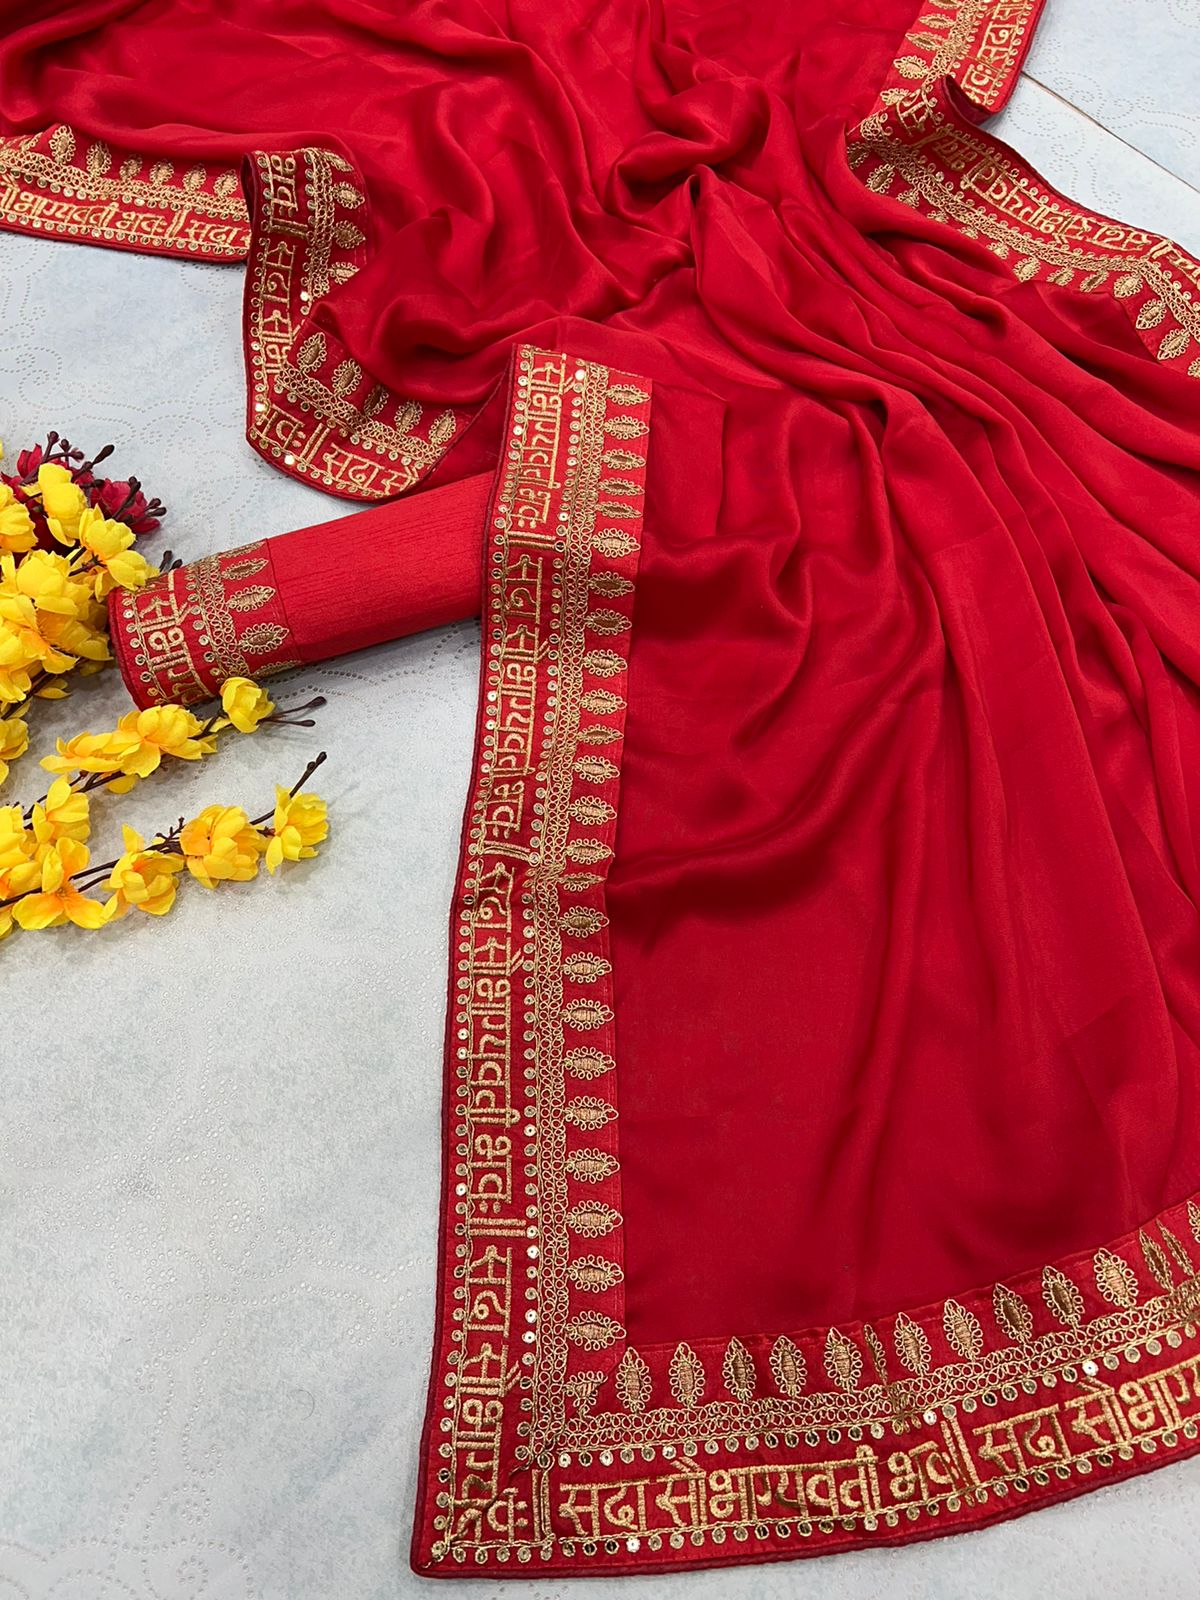 Married Women Special Red Branded Sada sobhagyawati bhav saree dvz0003493